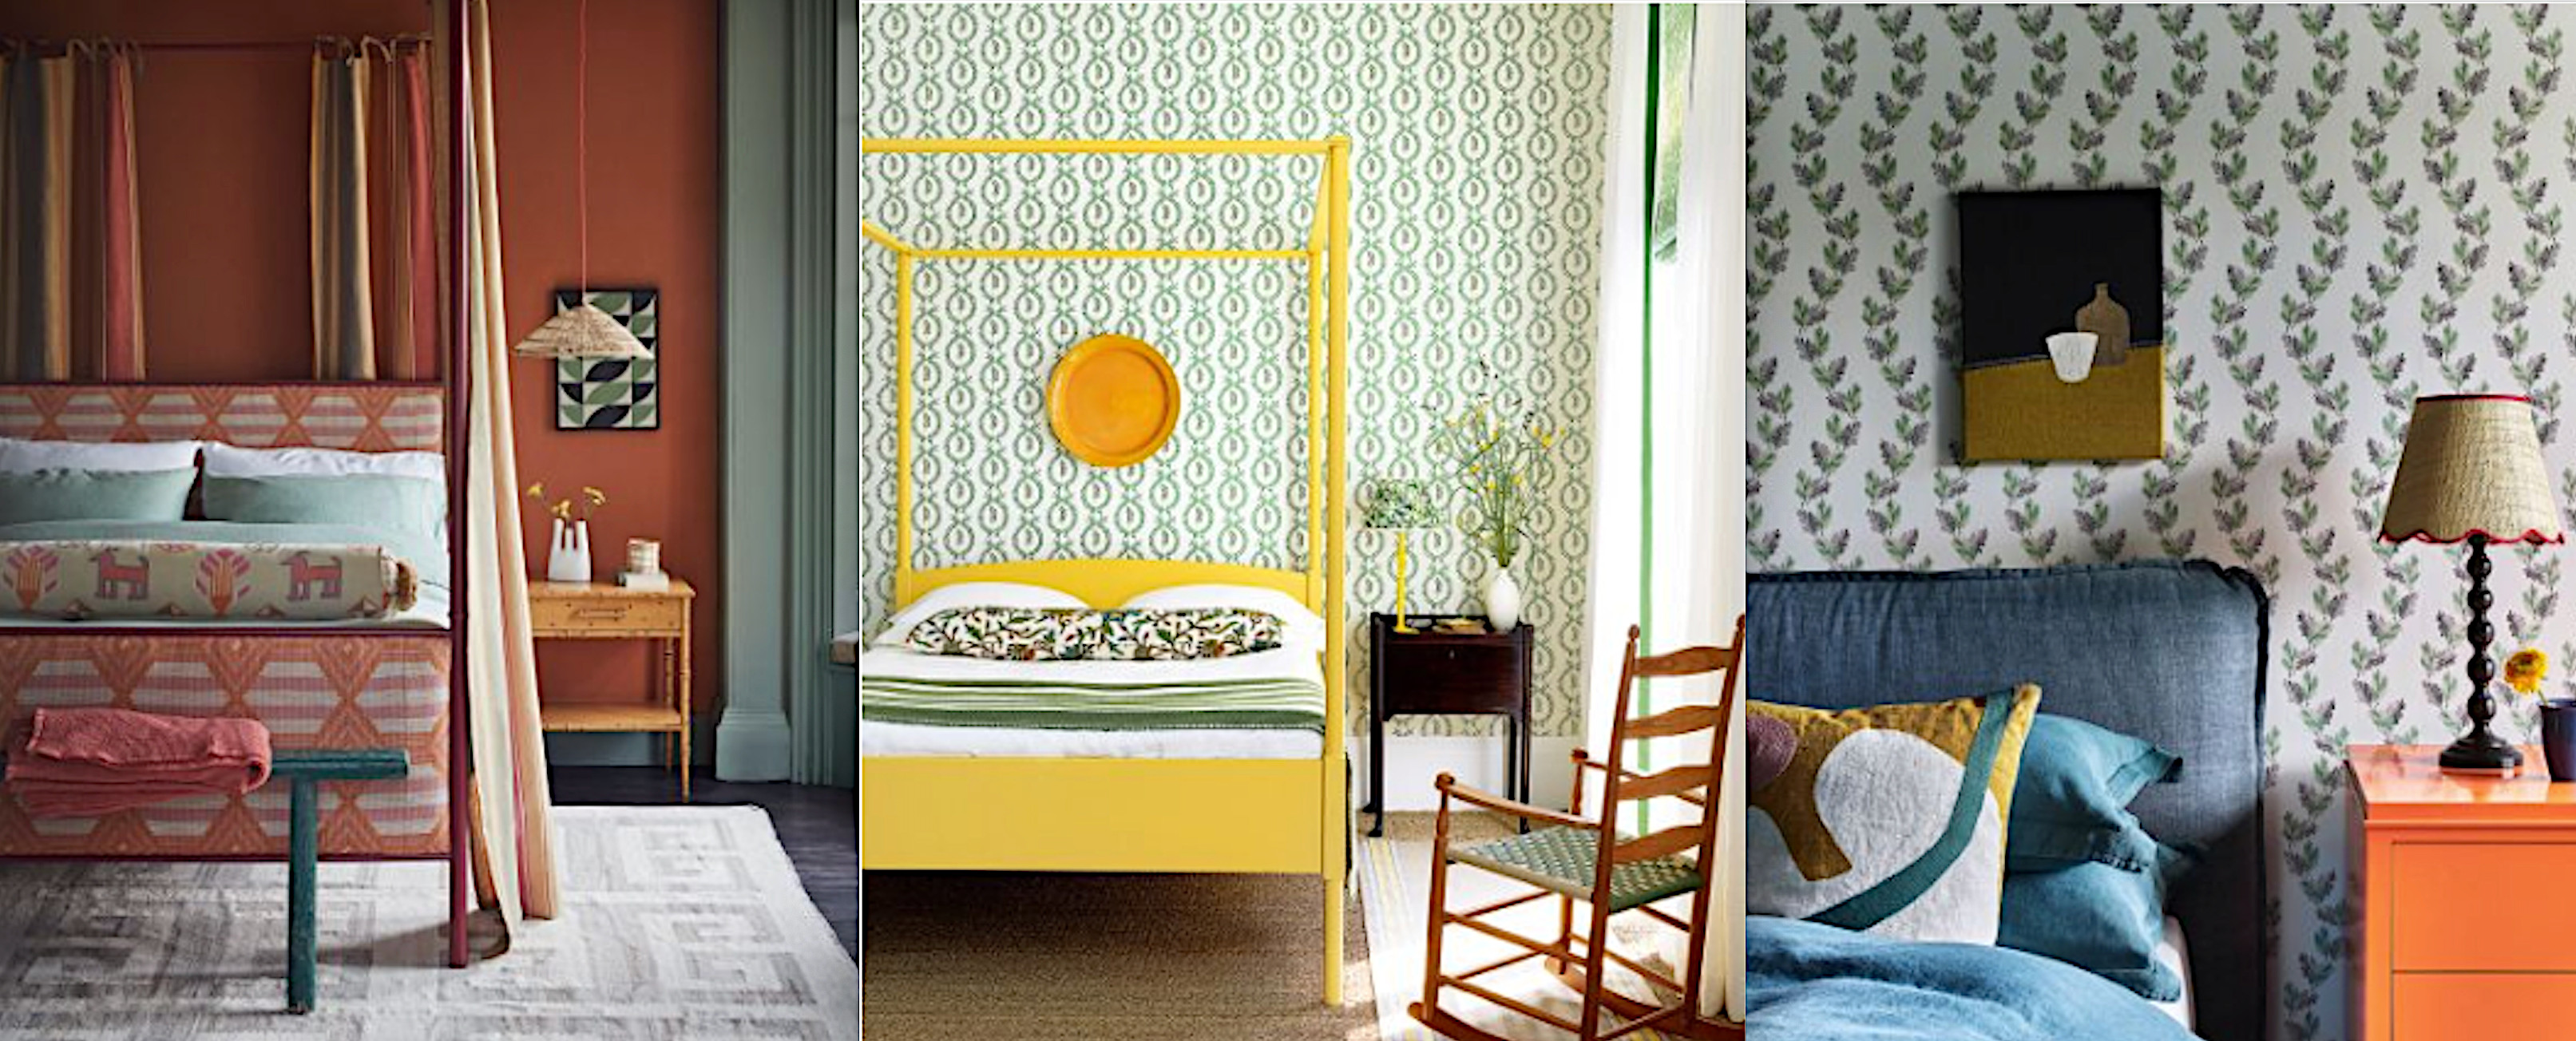 pattern design decor ideas inspiration waves minimalist aesthetic